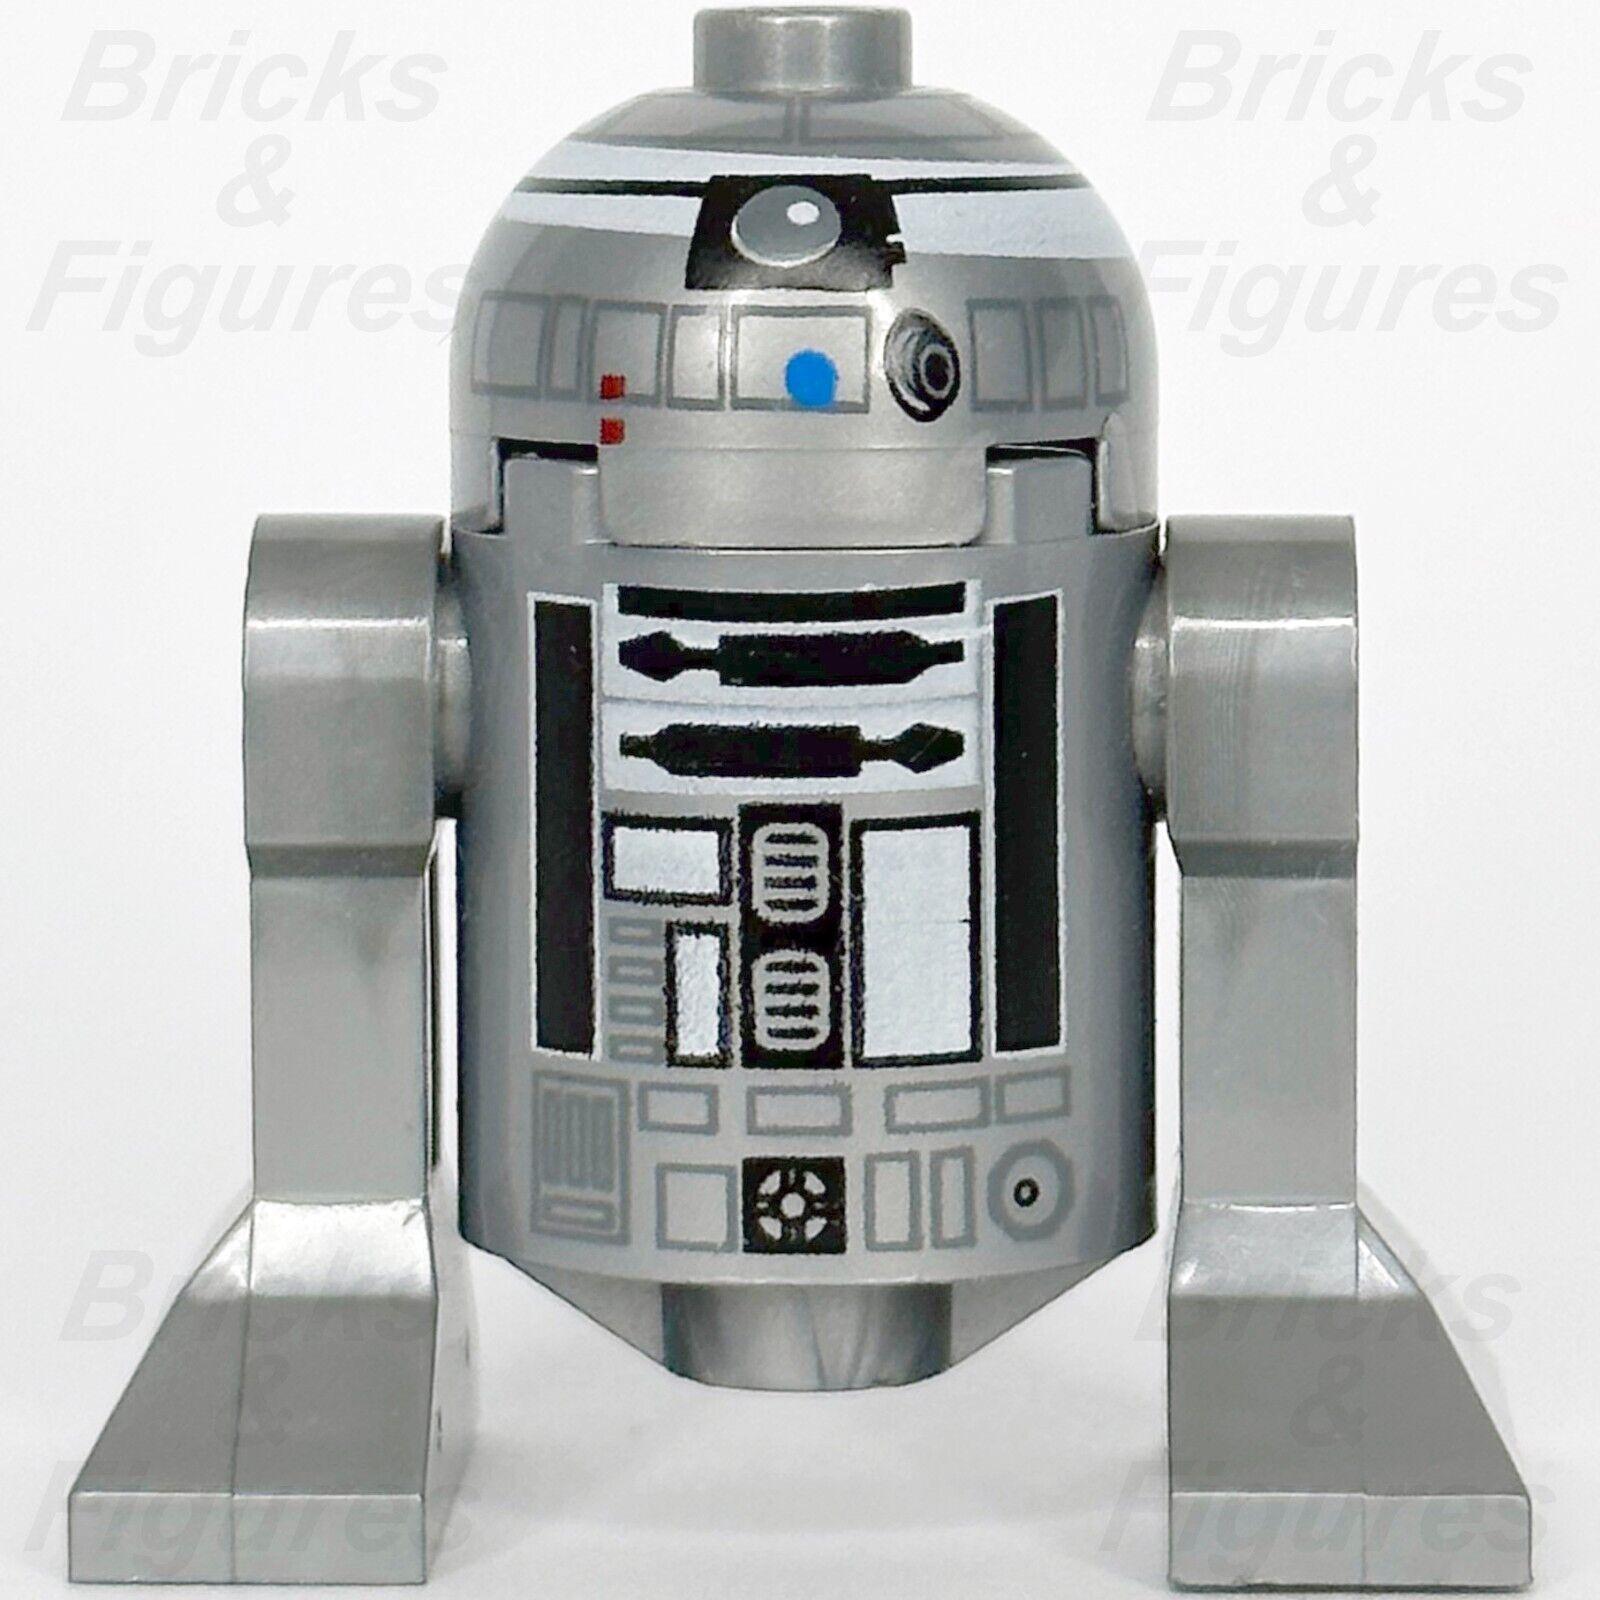 LEGO Star Wars R2-Q2 Astromech Droid Minifigure Legends 7915 sw0303 Minifig - Bricks & Figures